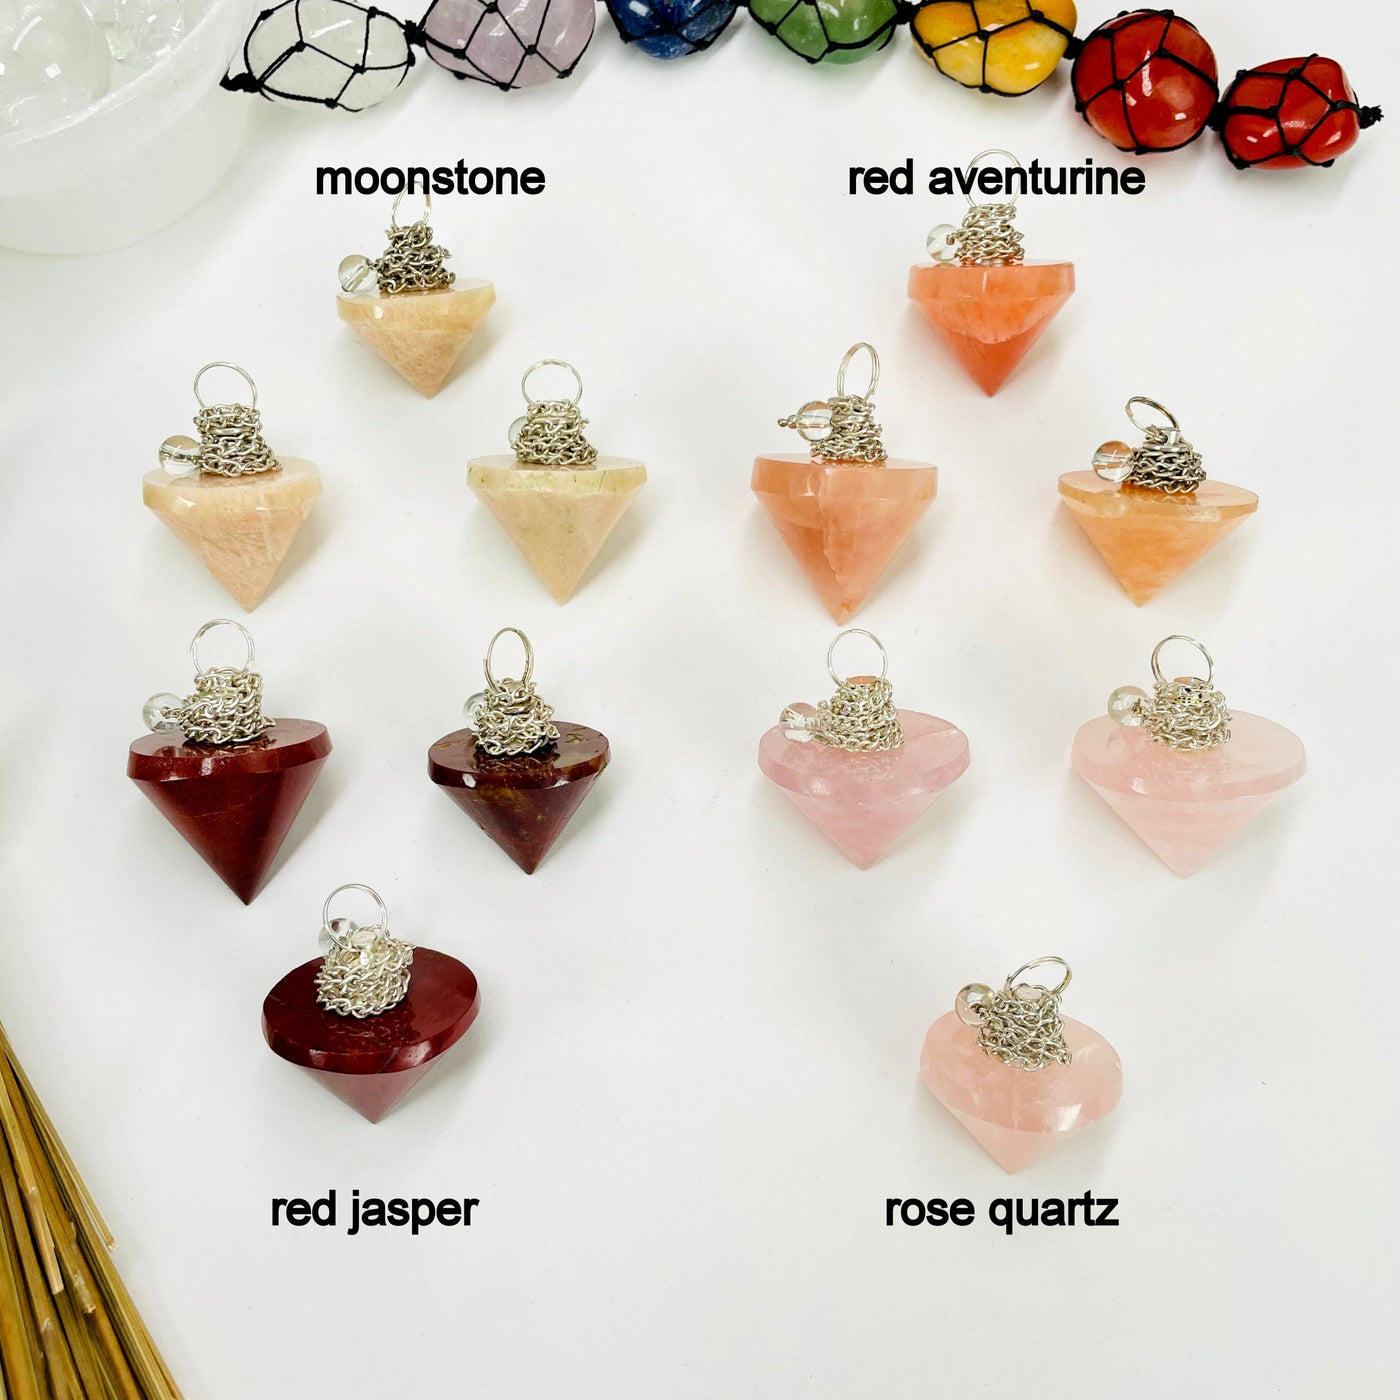 three moonstone, red aventurine, red jasper, and rose quartz pendulum pendants on white background for possible variations